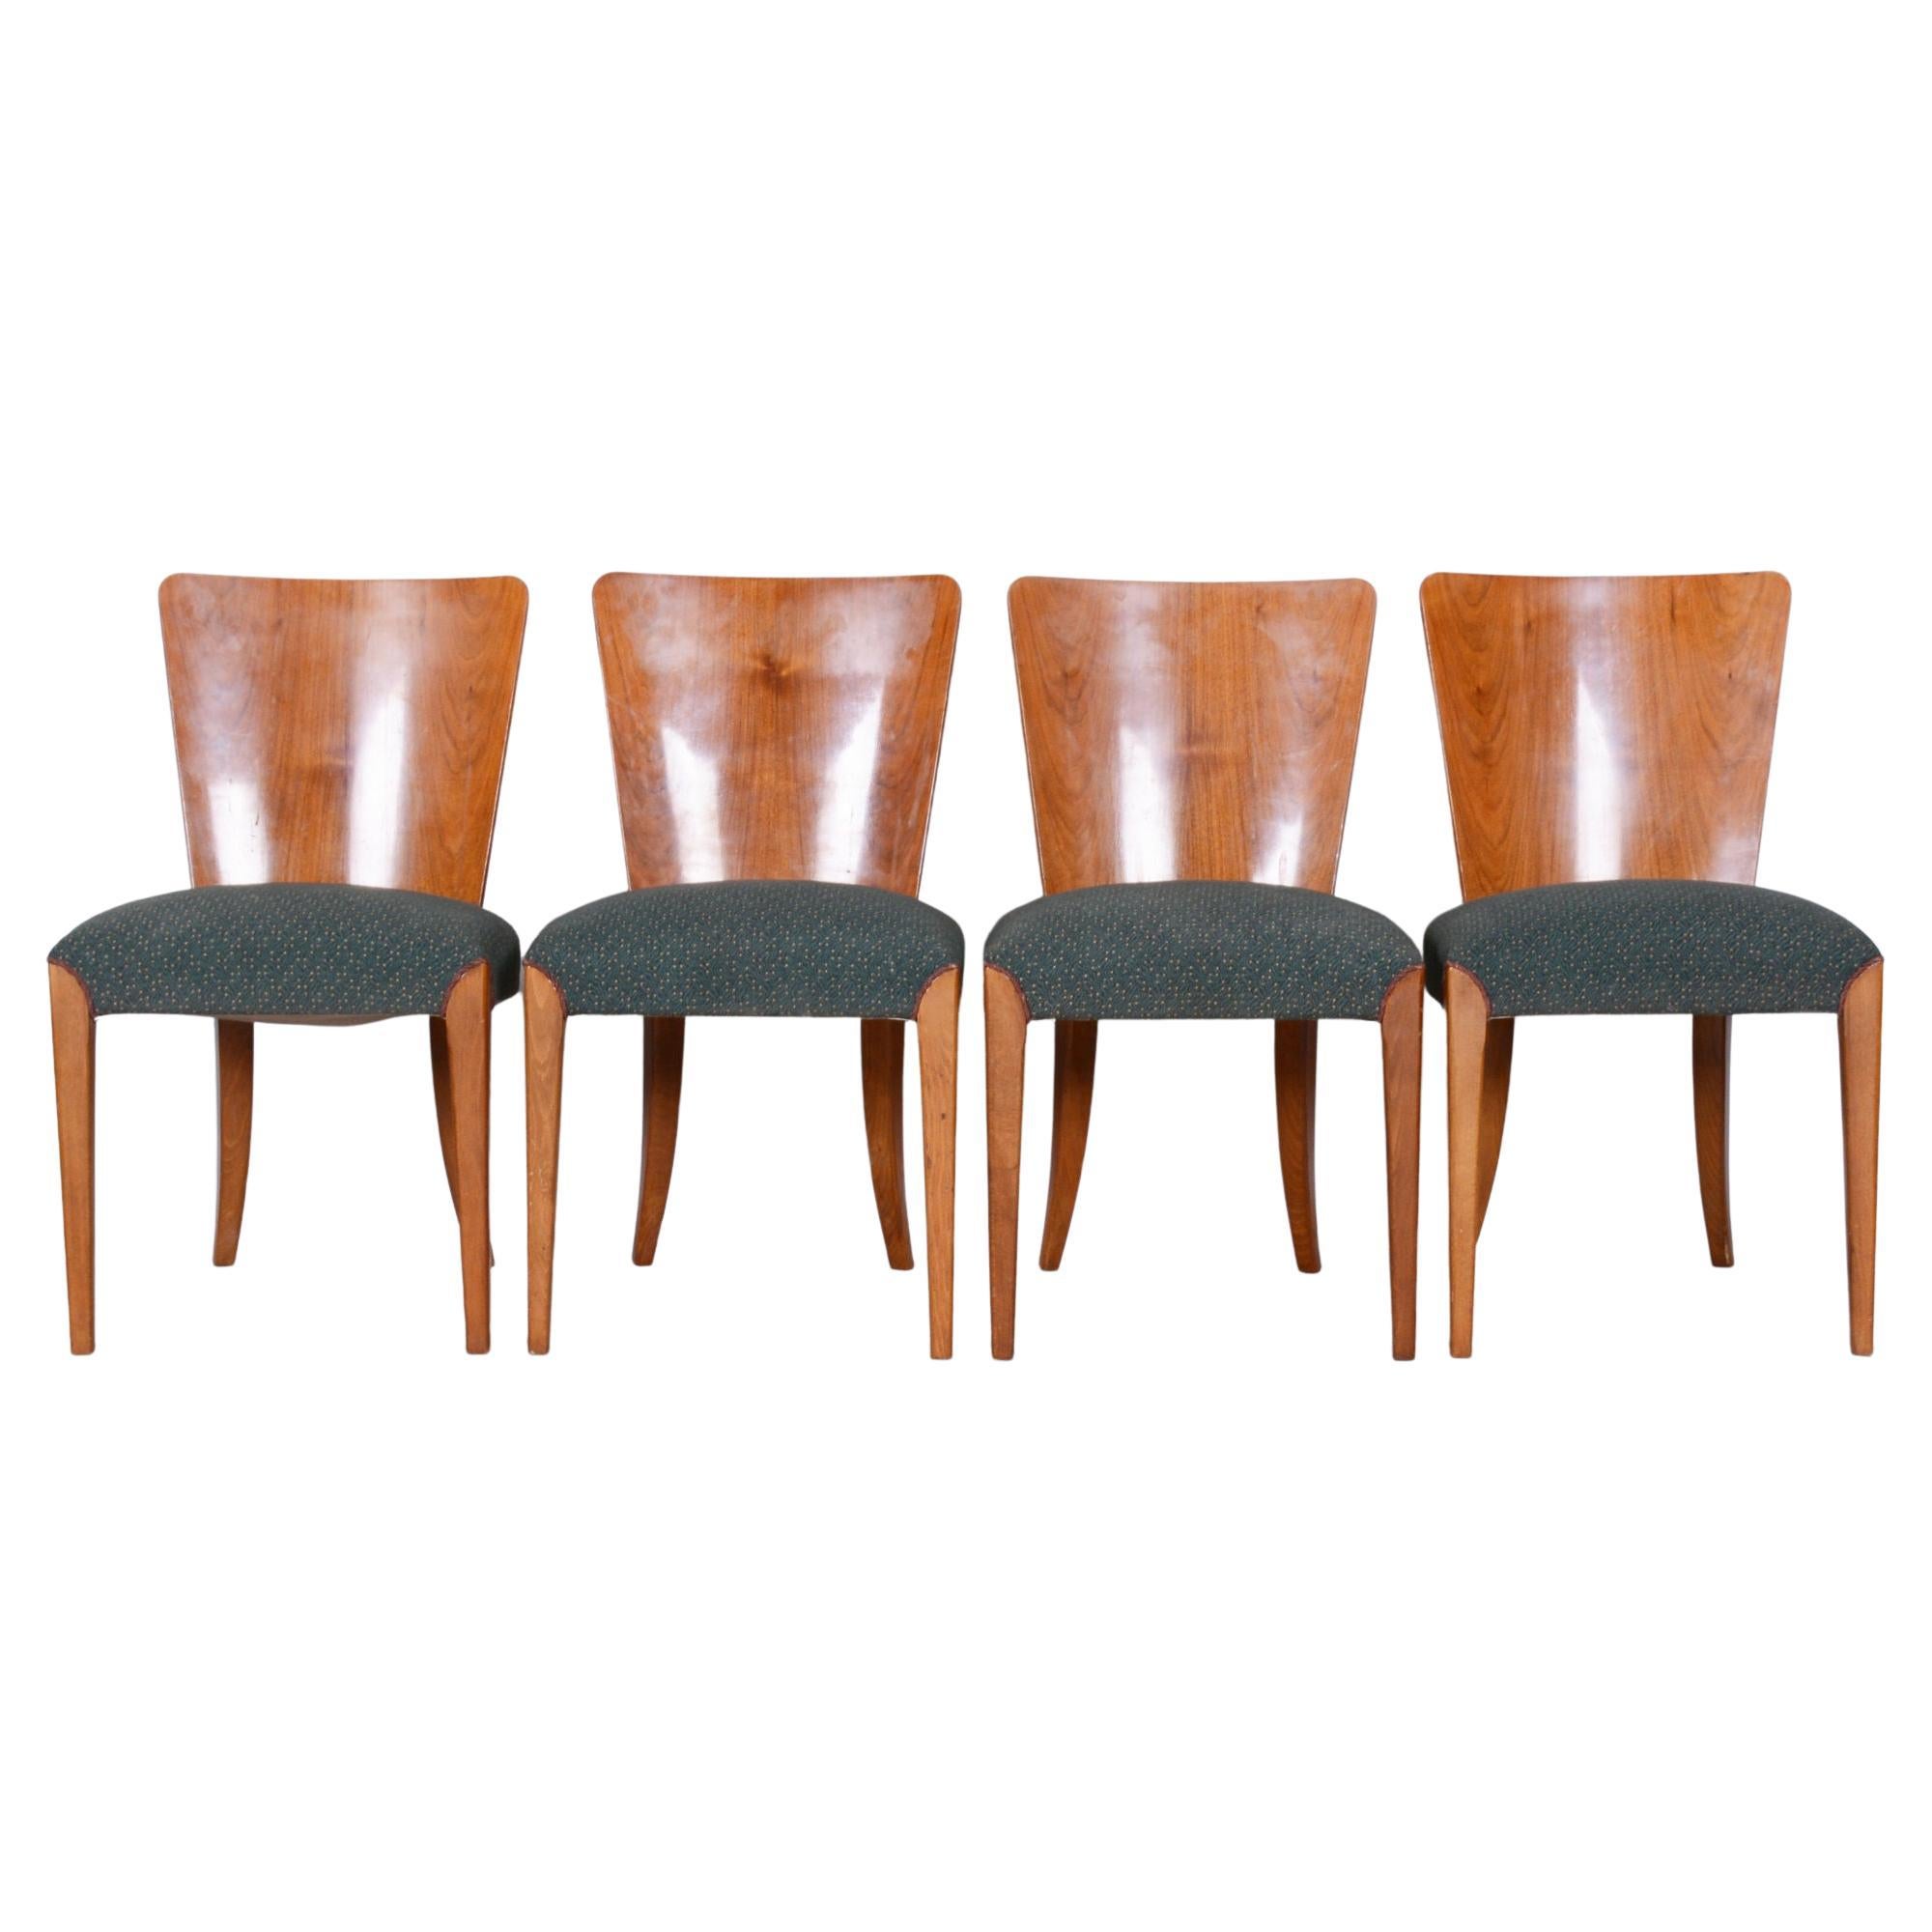 Set of Four Original ArtDeco Chairs, Halabala, UP Zavody, Beech, Czechia, 1940s For Sale